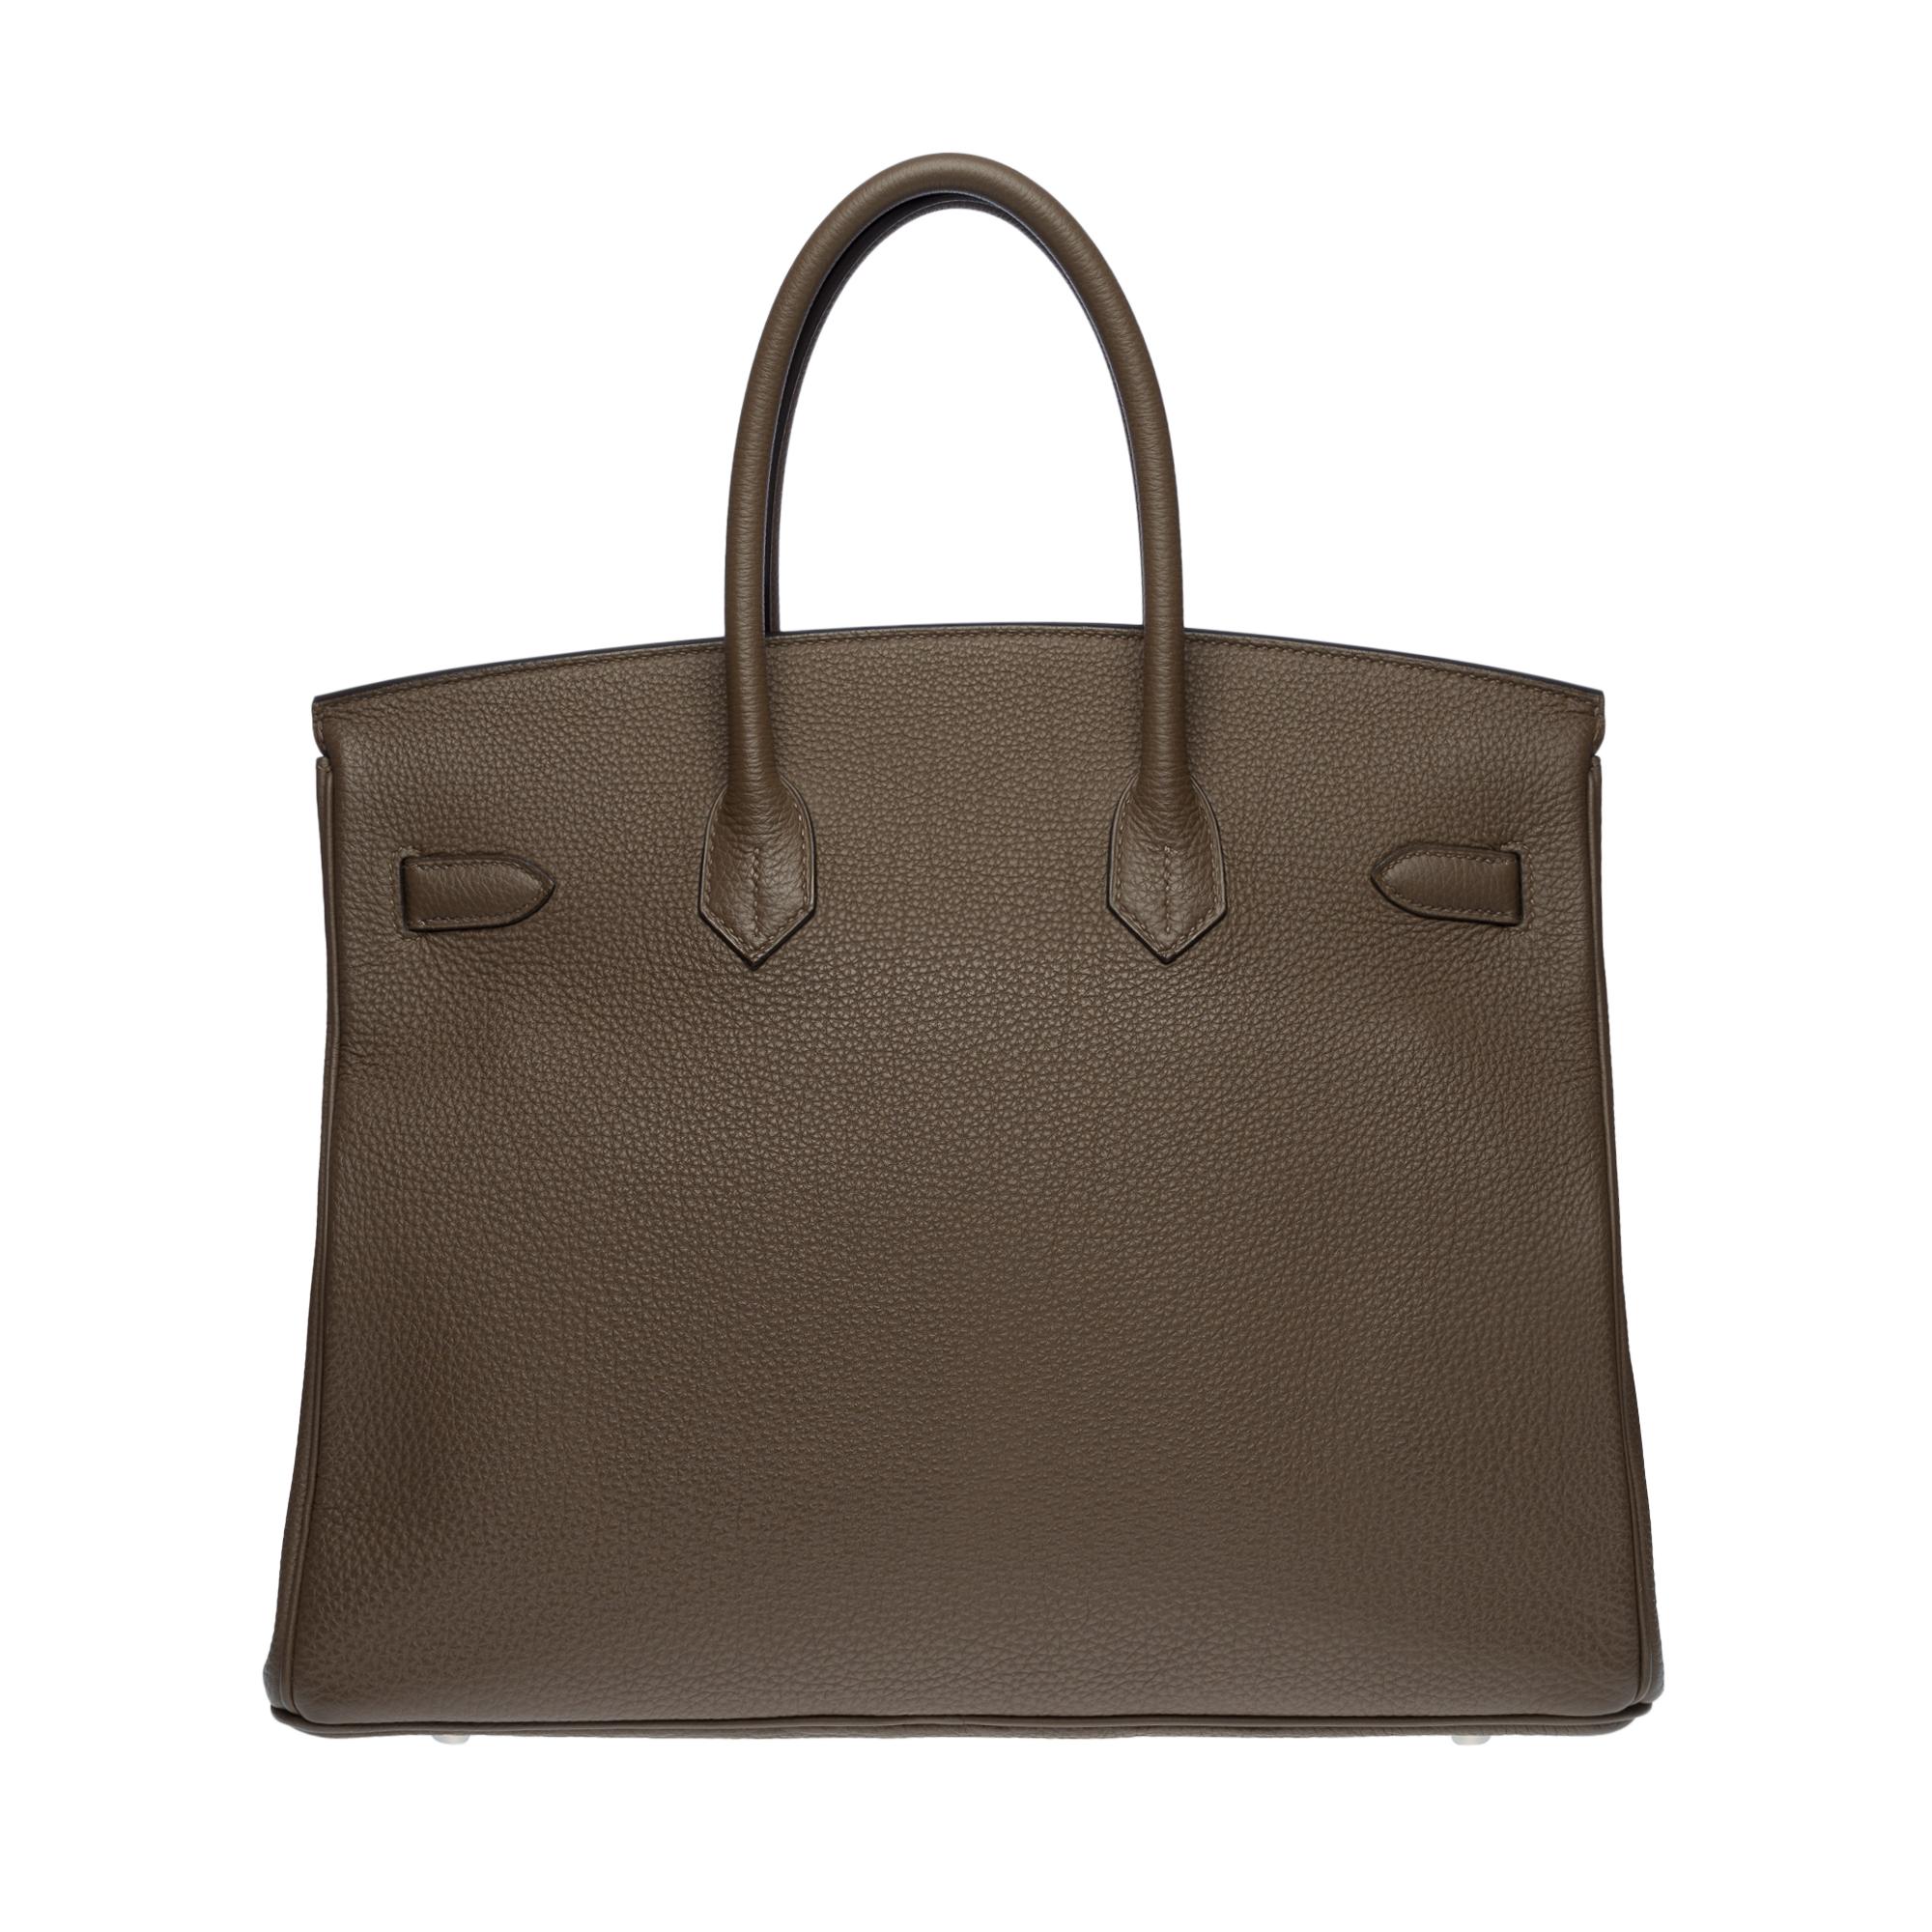 Magnificent Hermès Birkin 35 handbag in Gris Elephant Togo leather, SHW In Excellent Condition In Paris, IDF